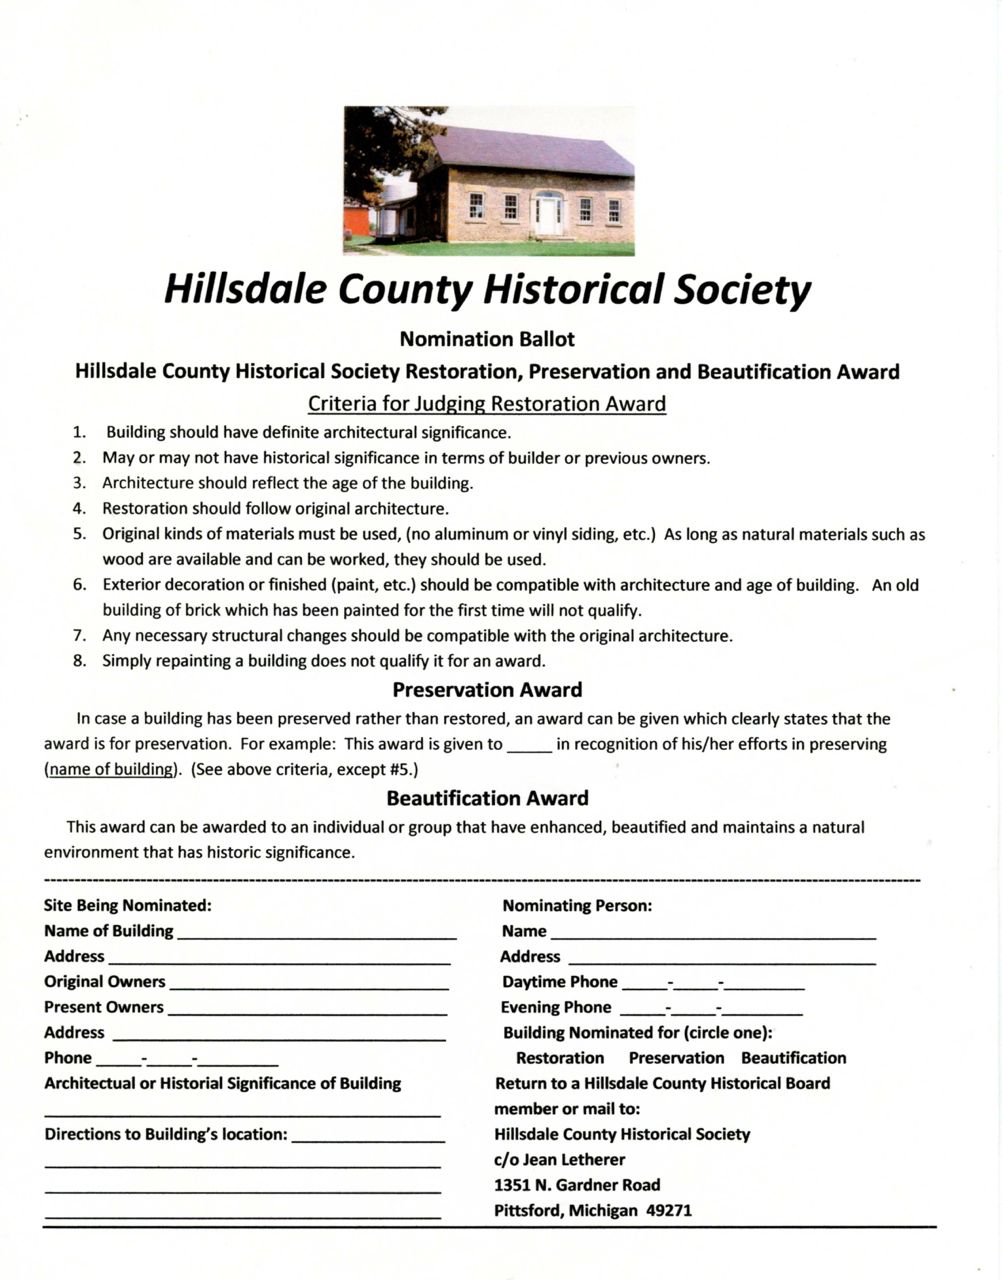 Renovation Awards — Hillsdale County Historical Society